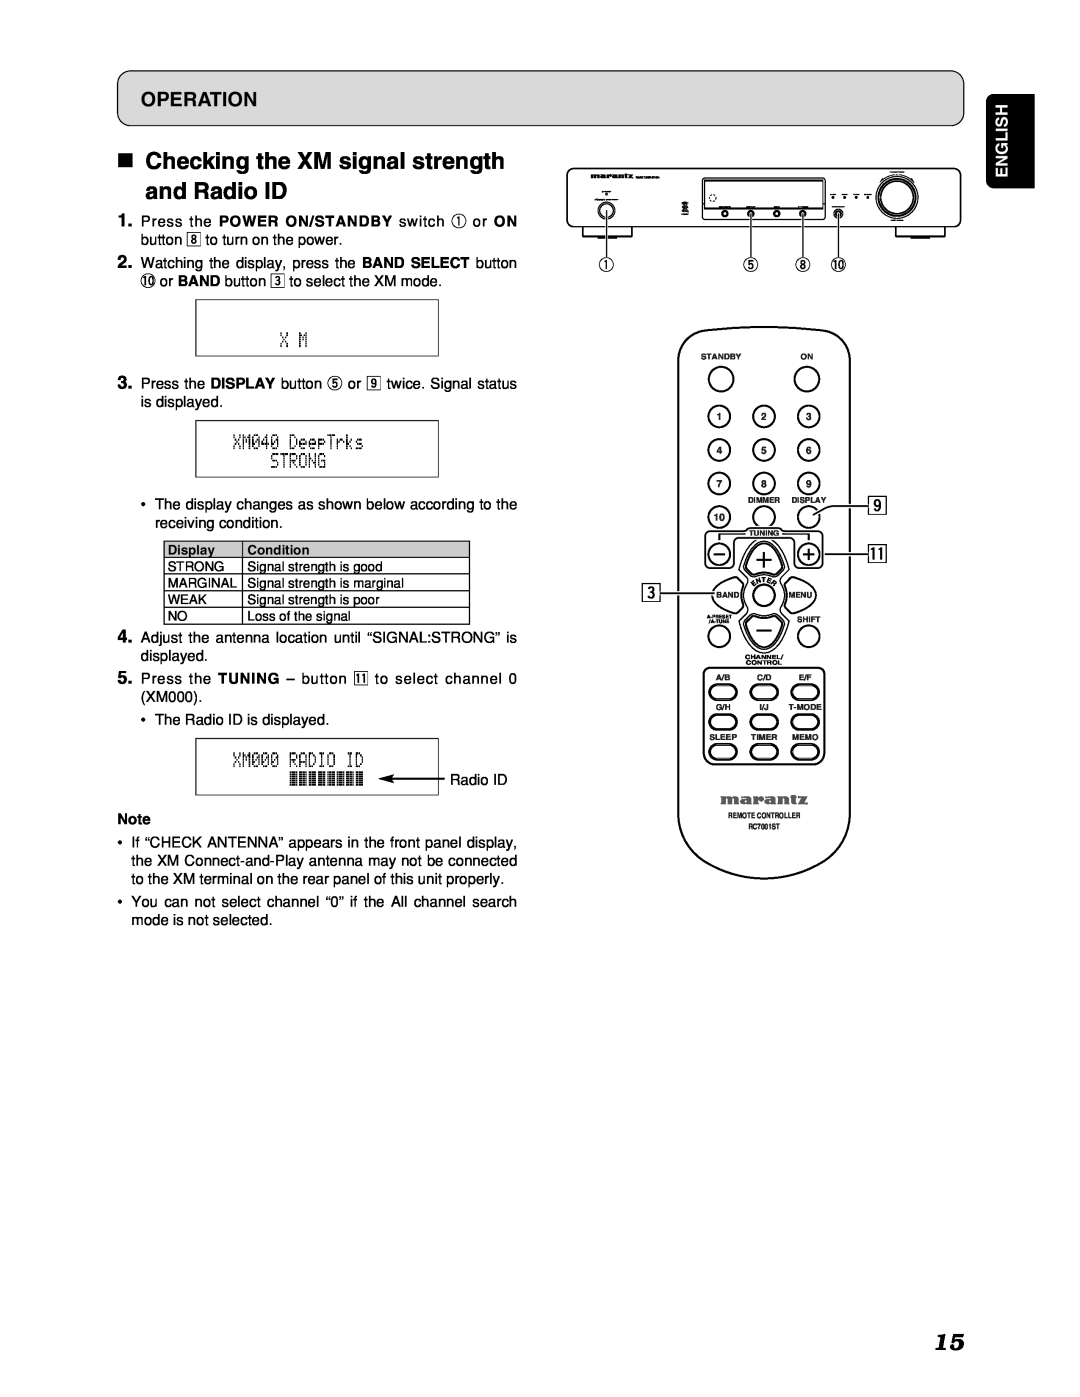 Marantz ST7001 manual 7Checking the XM signal strength, and Radio ID, Operation, English 